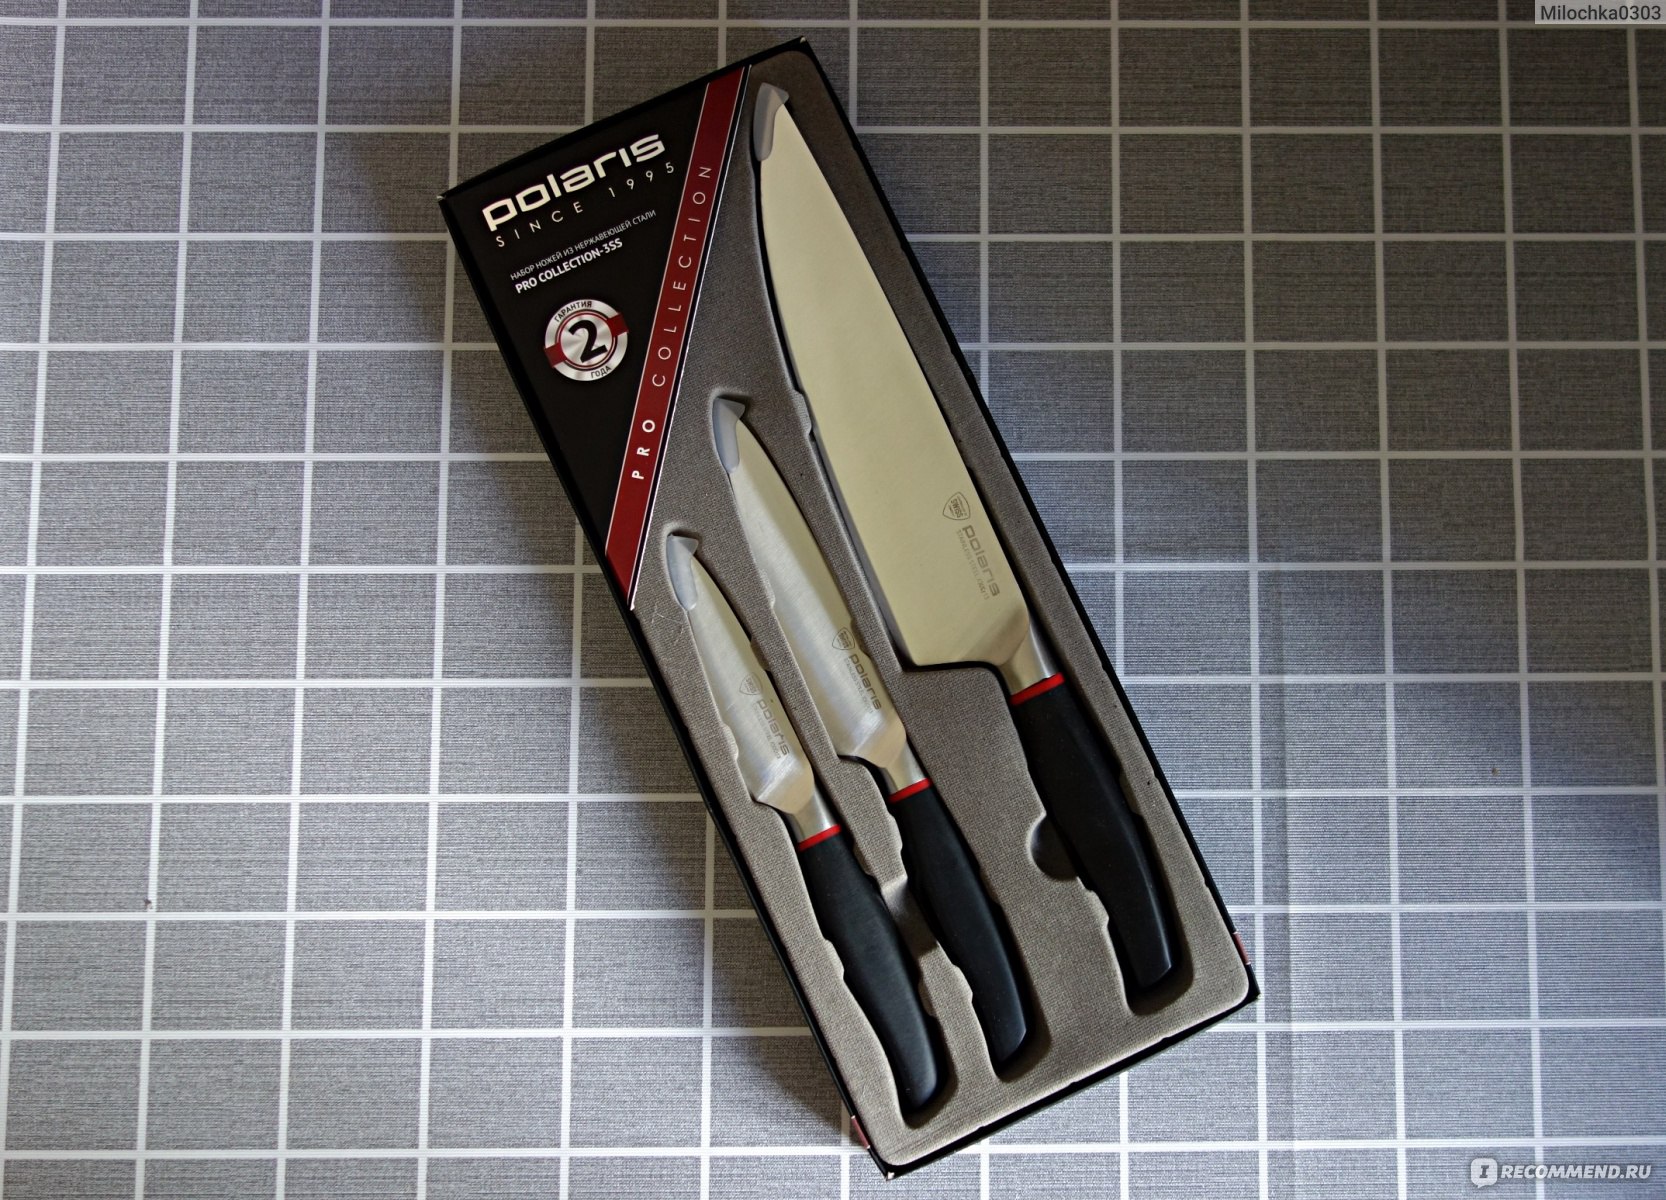 Polaris pro collection. Набор Polaris Pro collection-3ss, 3 ножа. Набор ножей Поларис. Набор ножей Полярис. Картинки набора кухонных ножей Поларис.